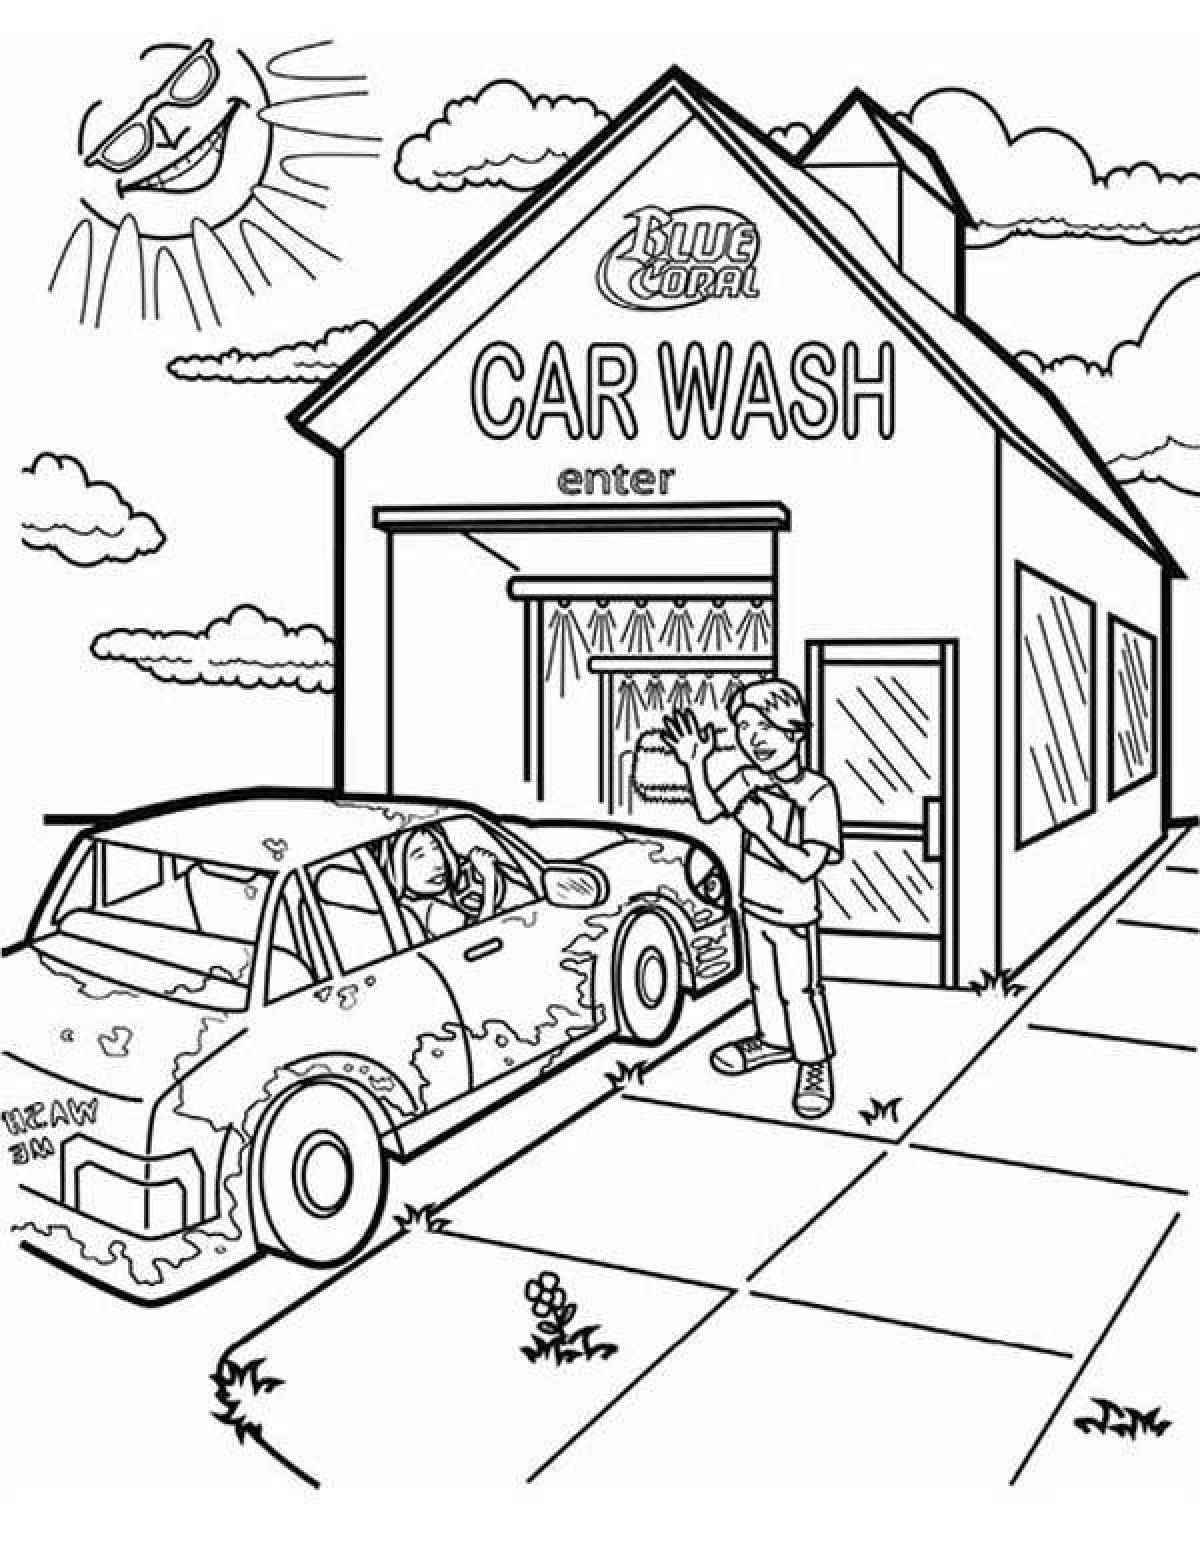 Car wash #17